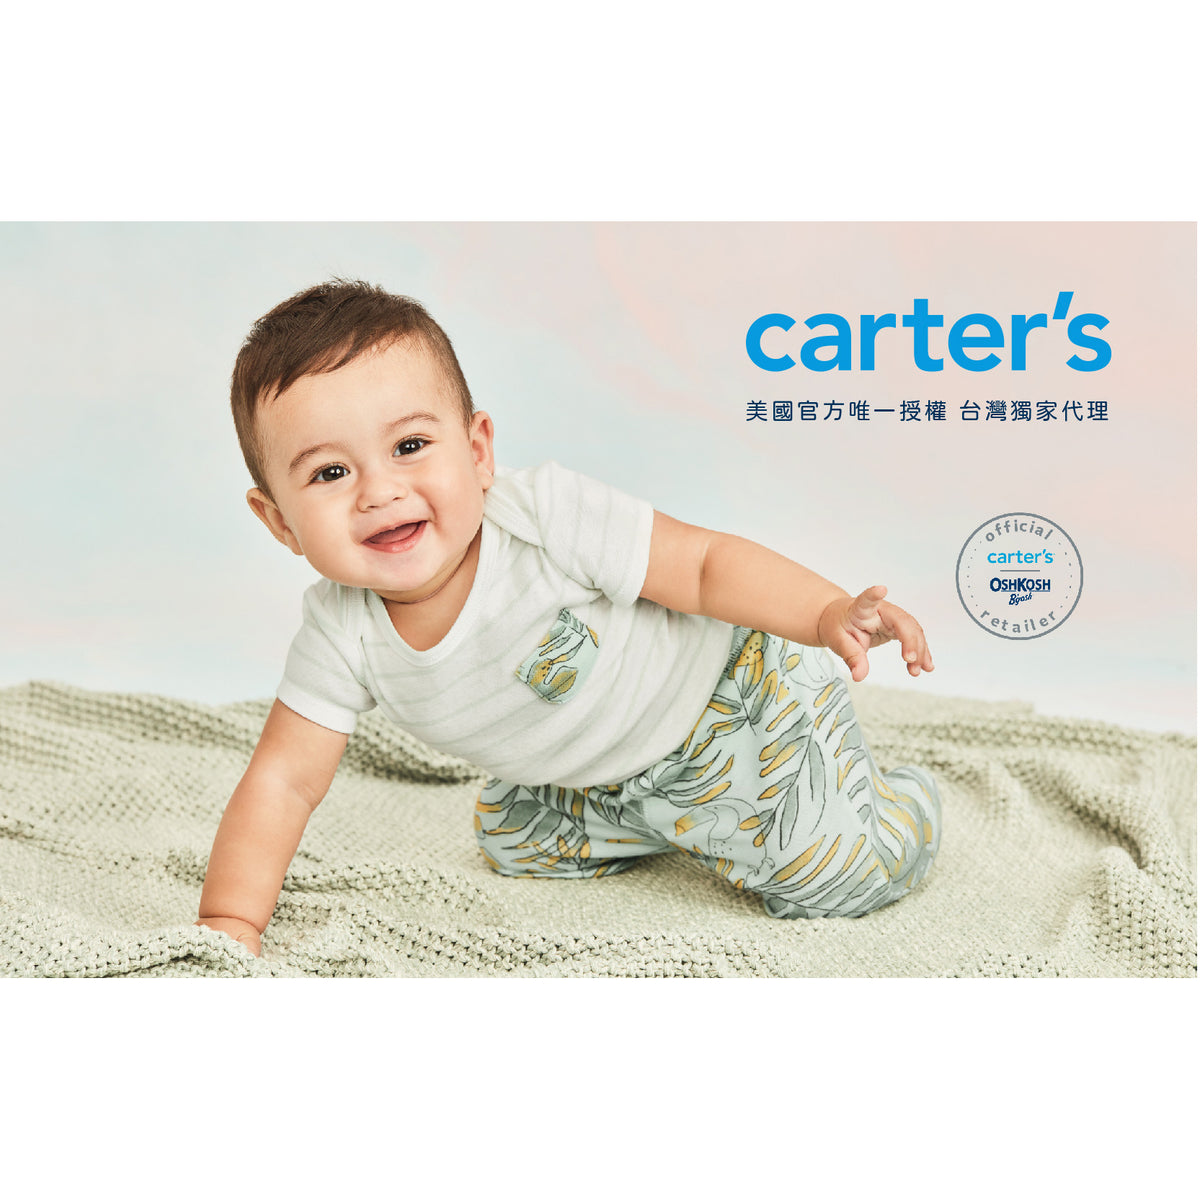 Carter's 寶貝去度假2件組套裝(6M-24M)